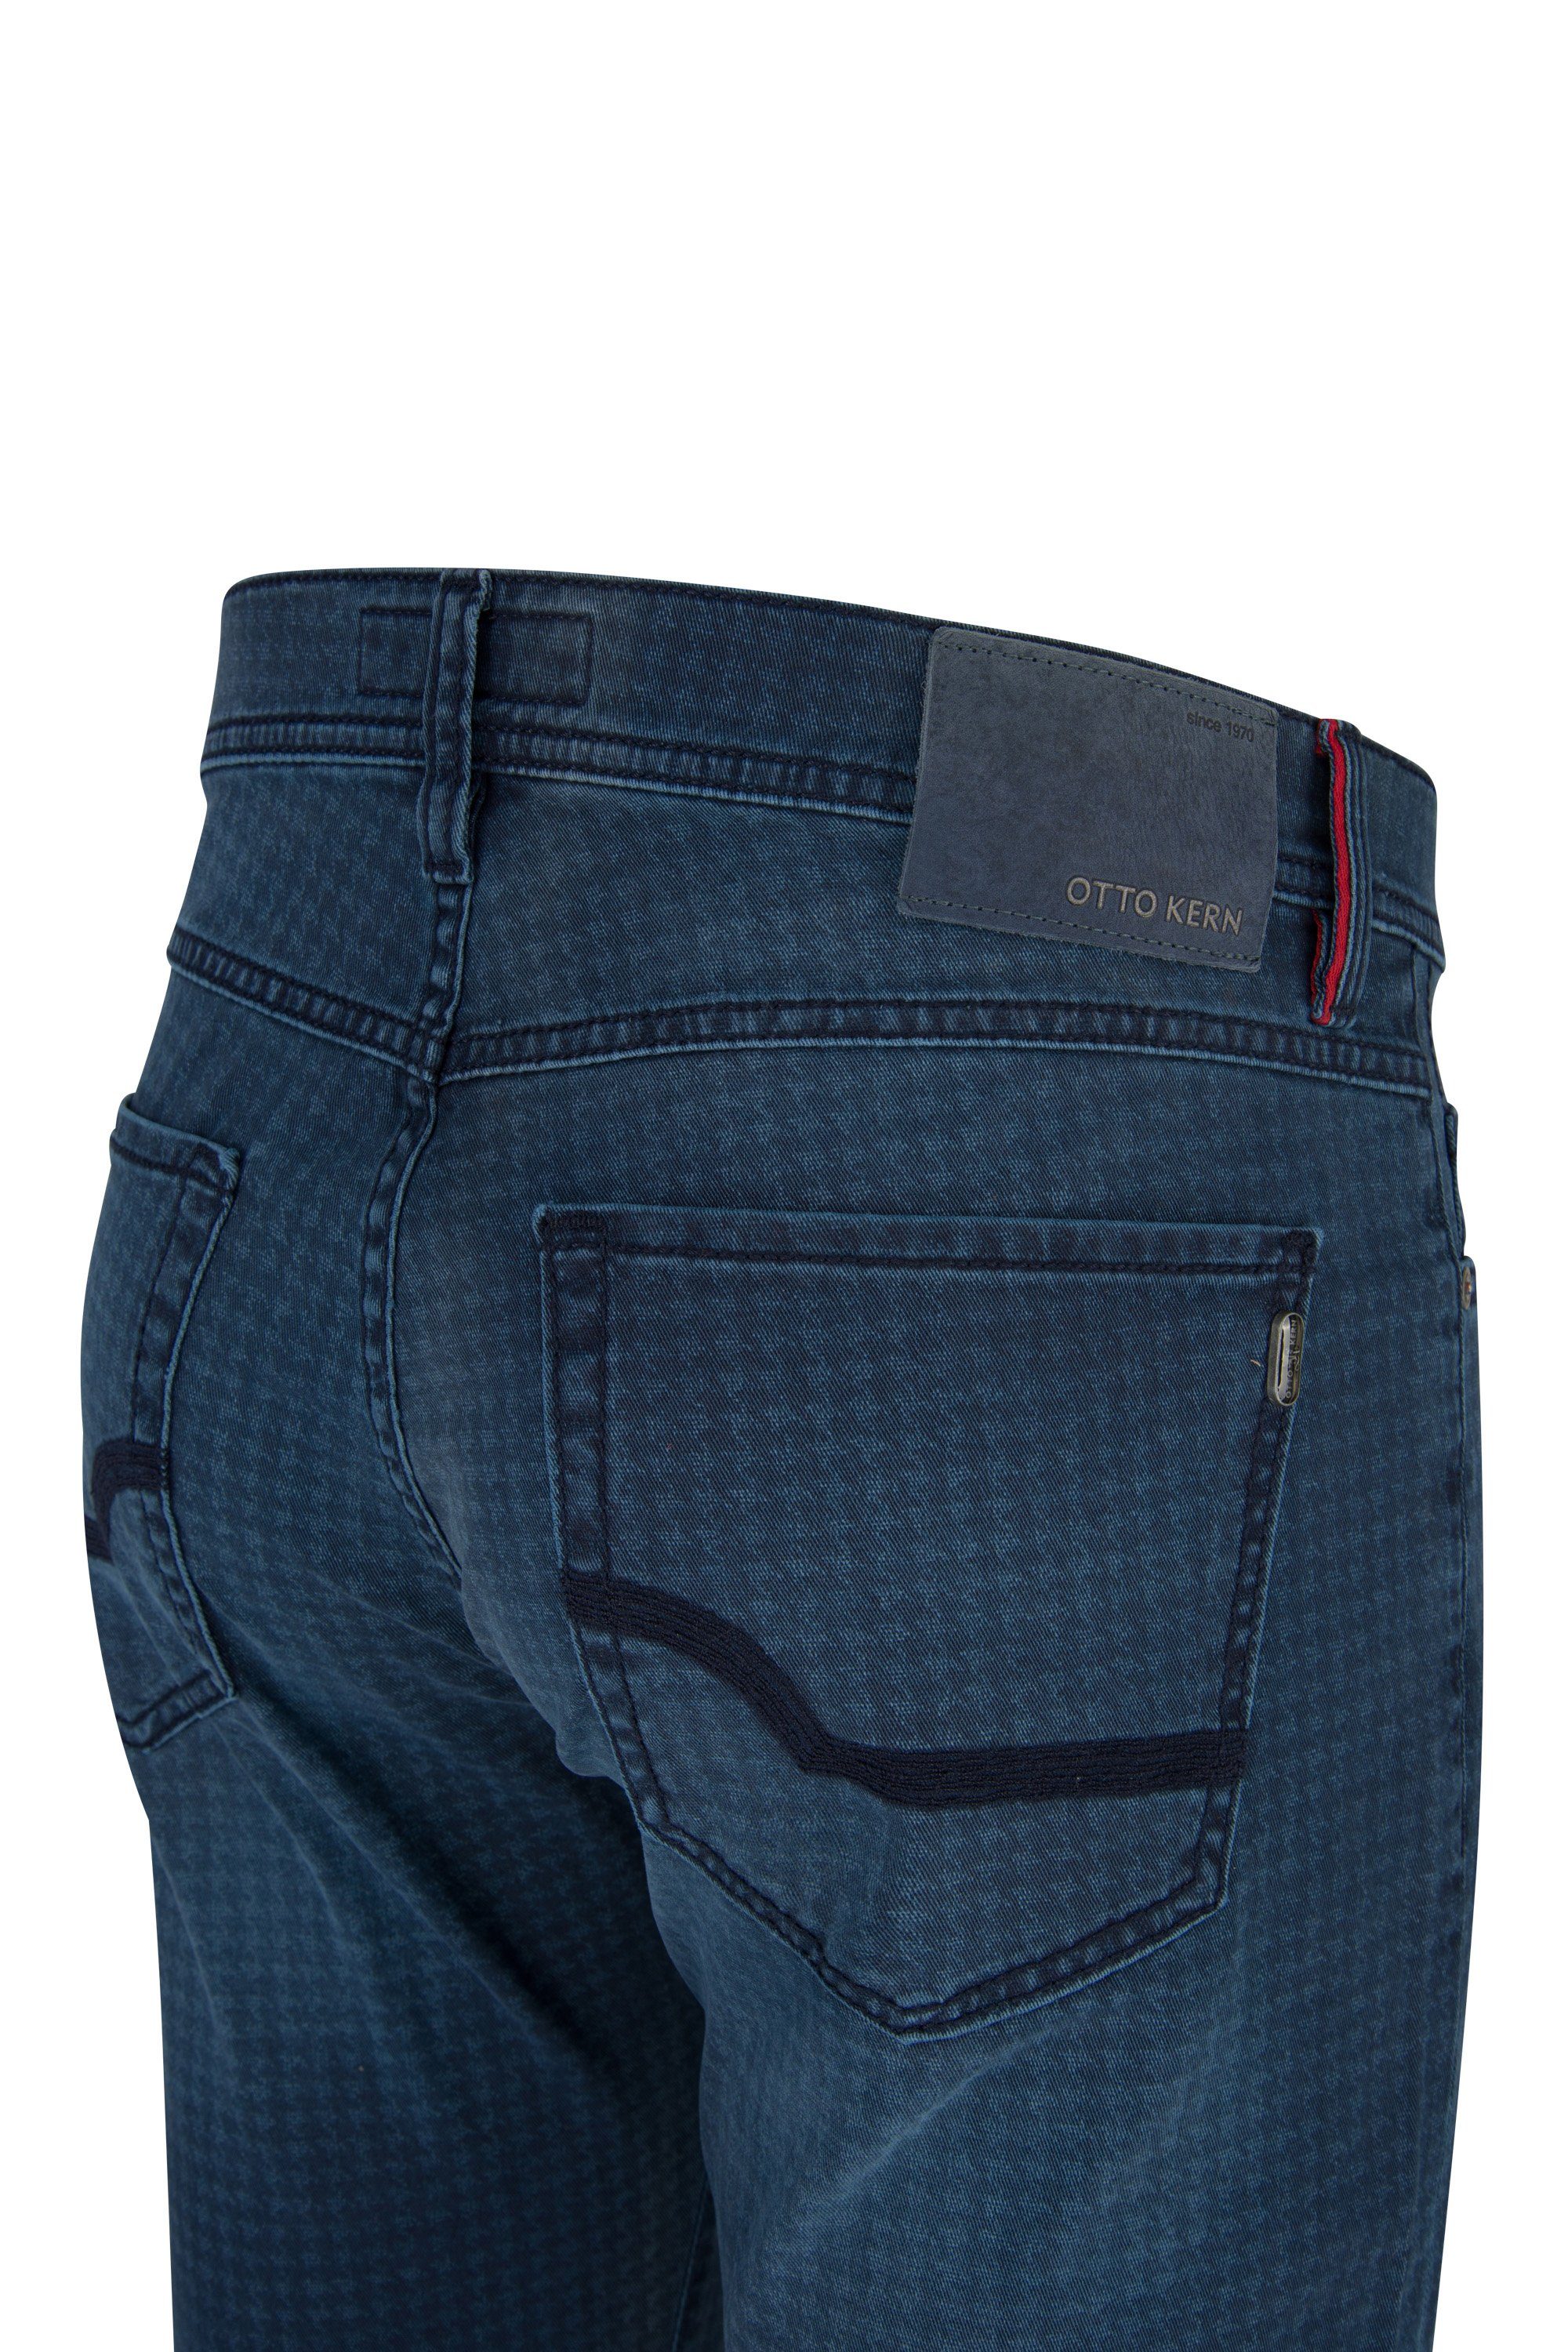 patterned KERN 5-Pocket-Jeans OTTO used 6700.6822 67042 Kern JOHN blue